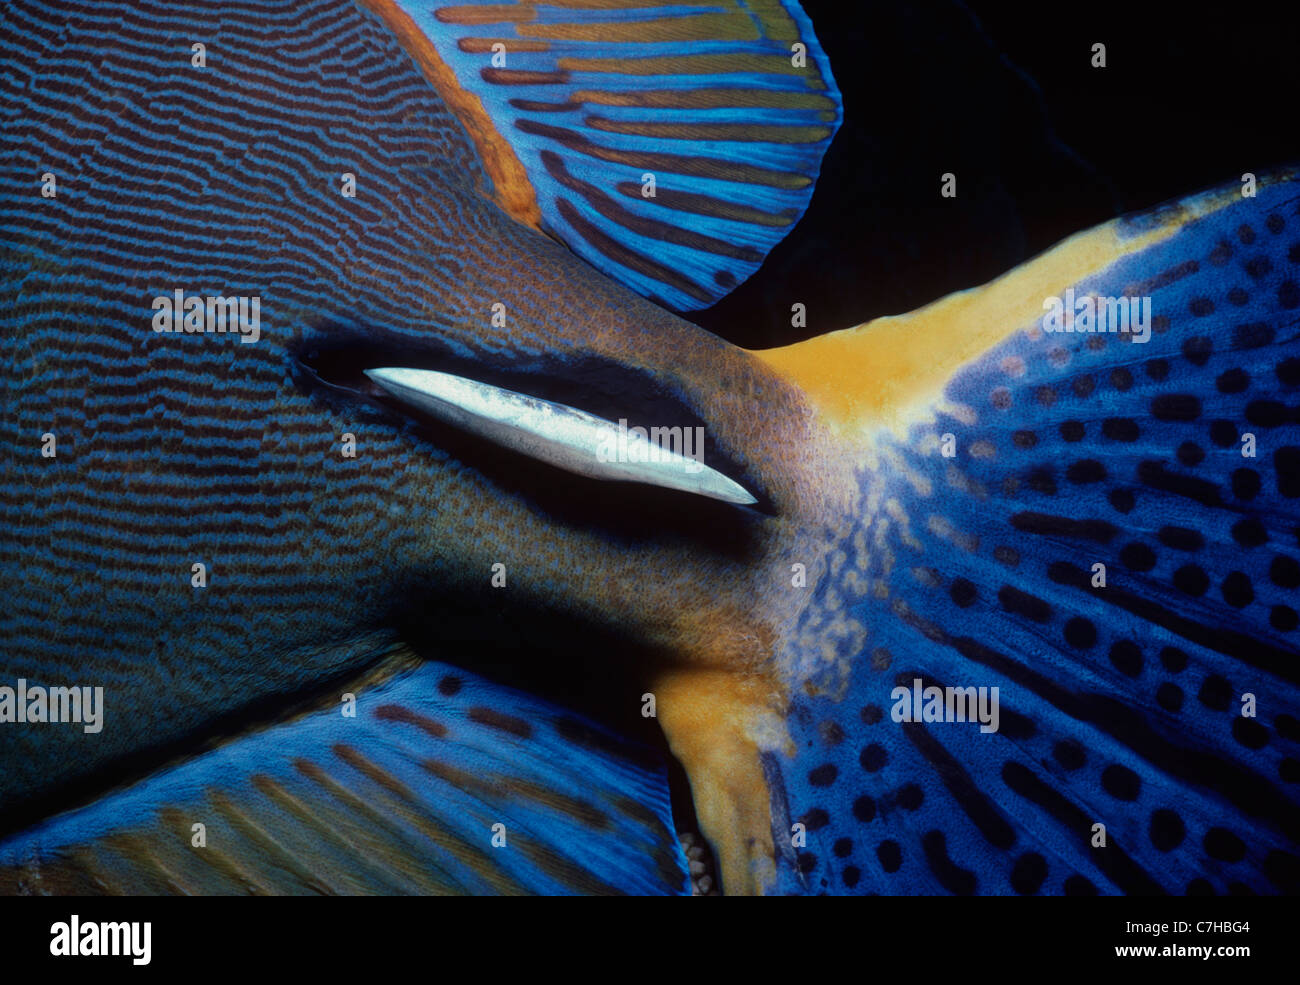 Knives on tail base of Ornate Surgeonfish (Acanthurus dussumieri), Australia - Great Barrier Reef Stock Photo